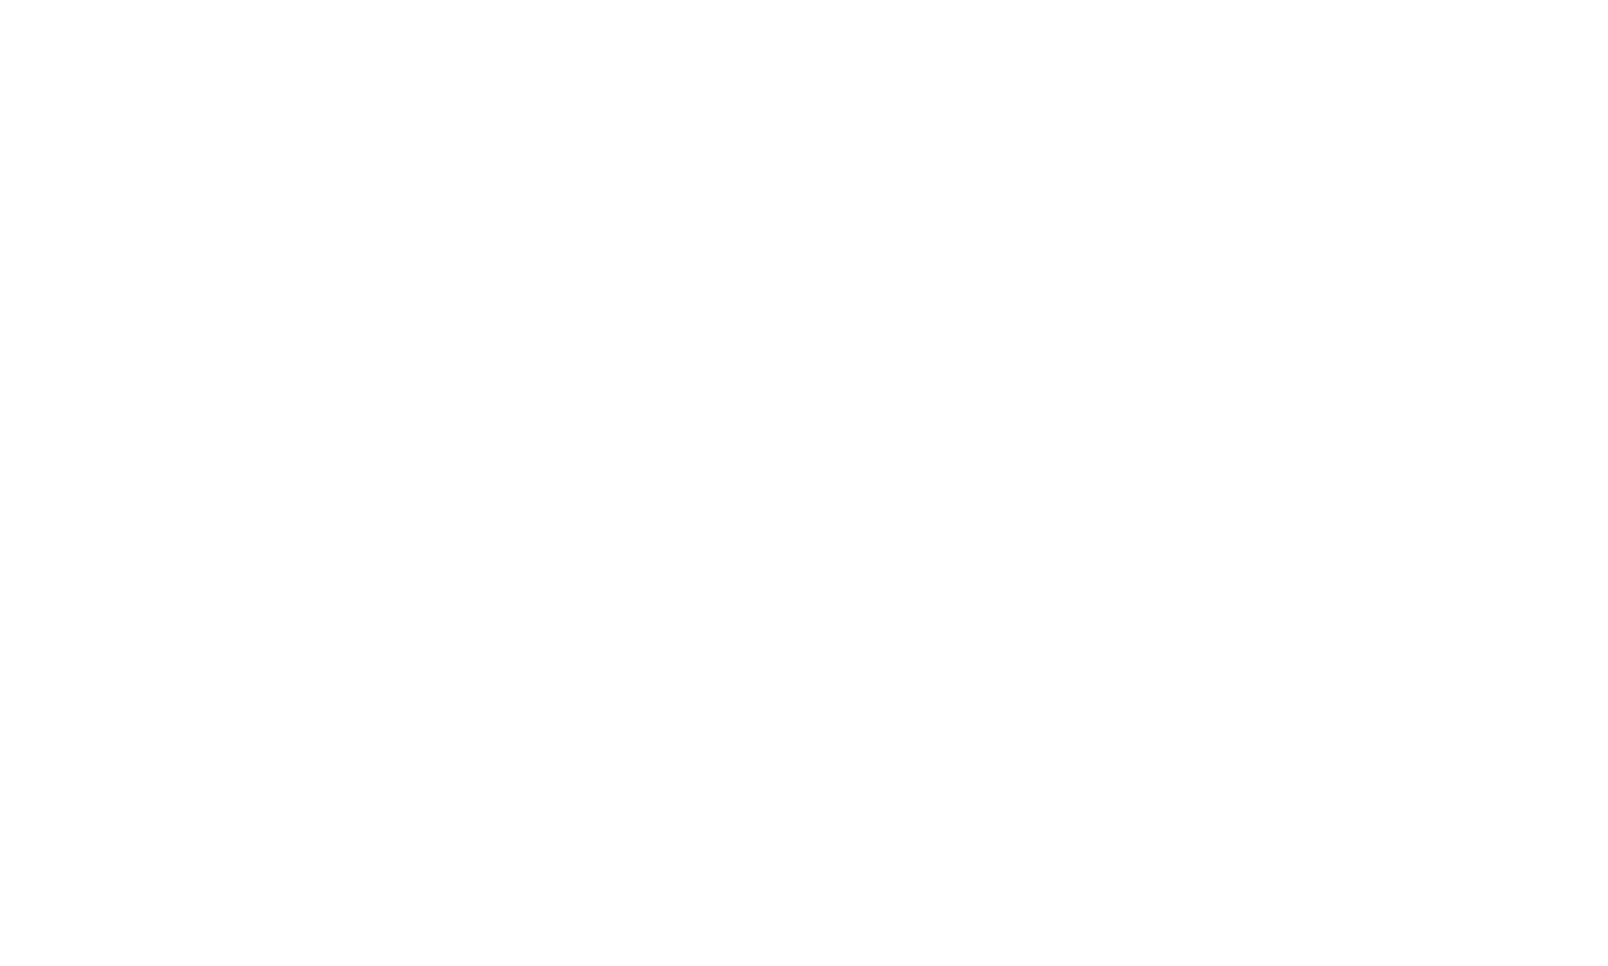 Stars Real Estate